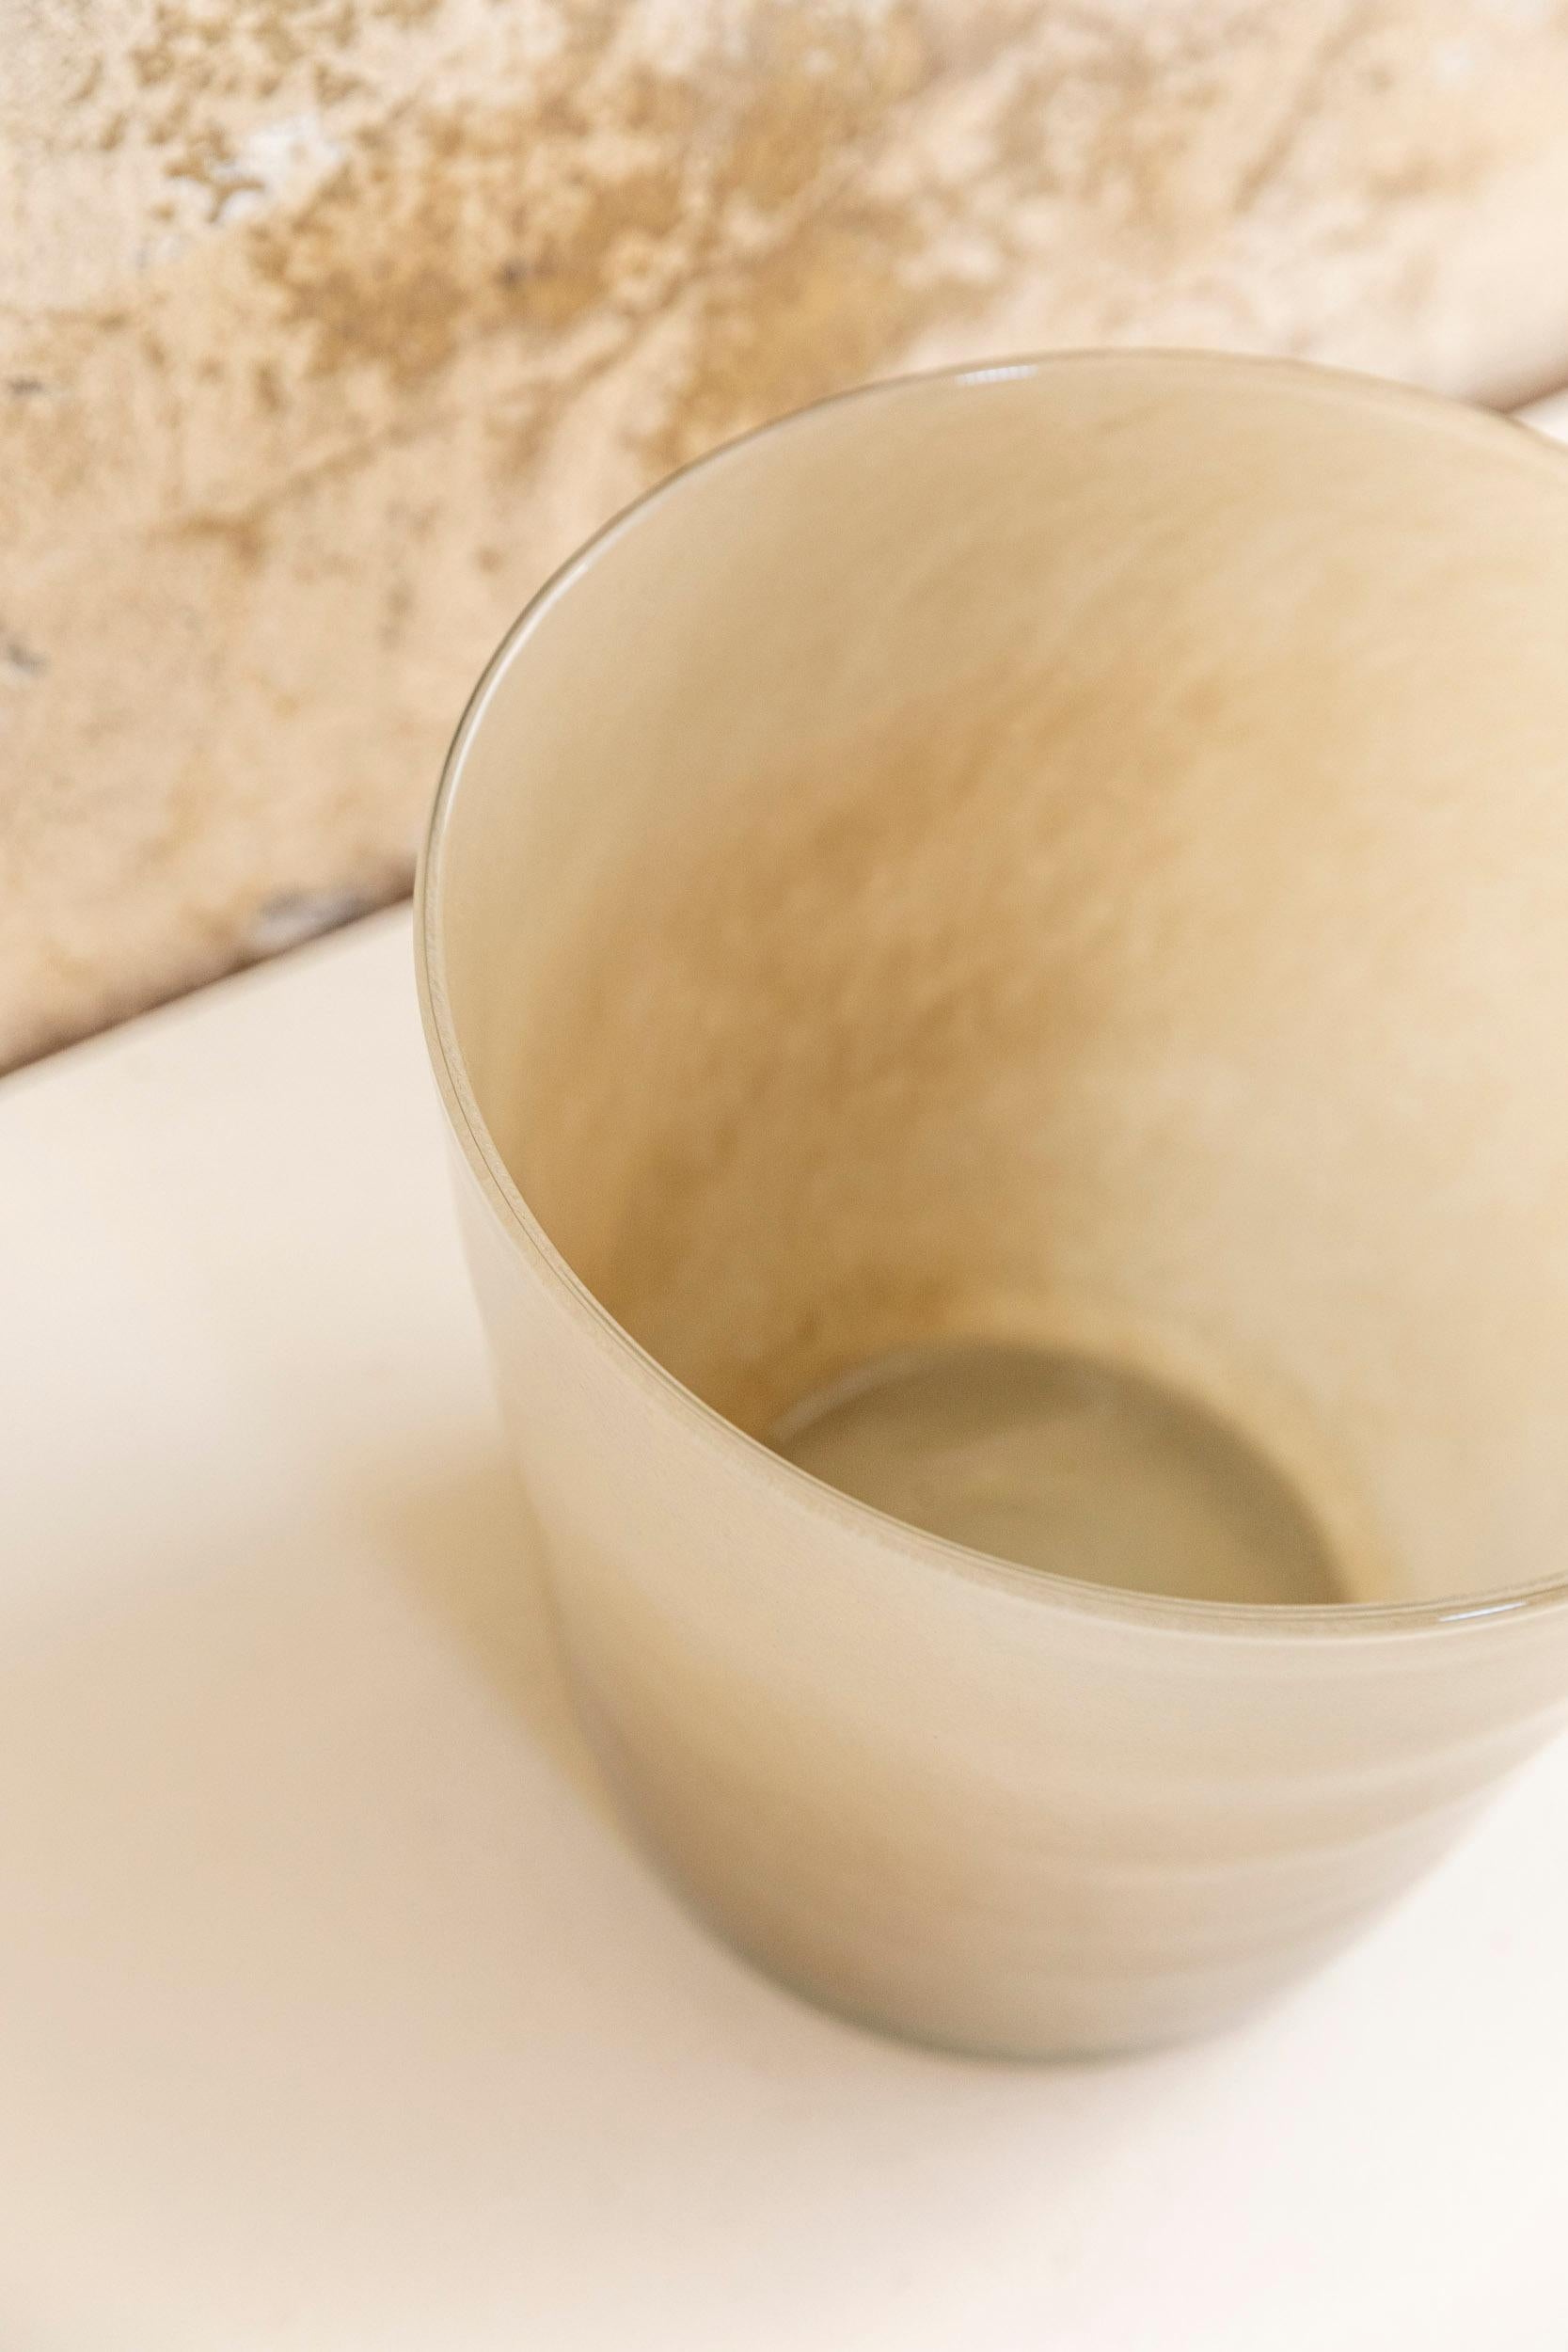 Mid-20th Century Italian Hand Blown Murano Glass Vase For Sale